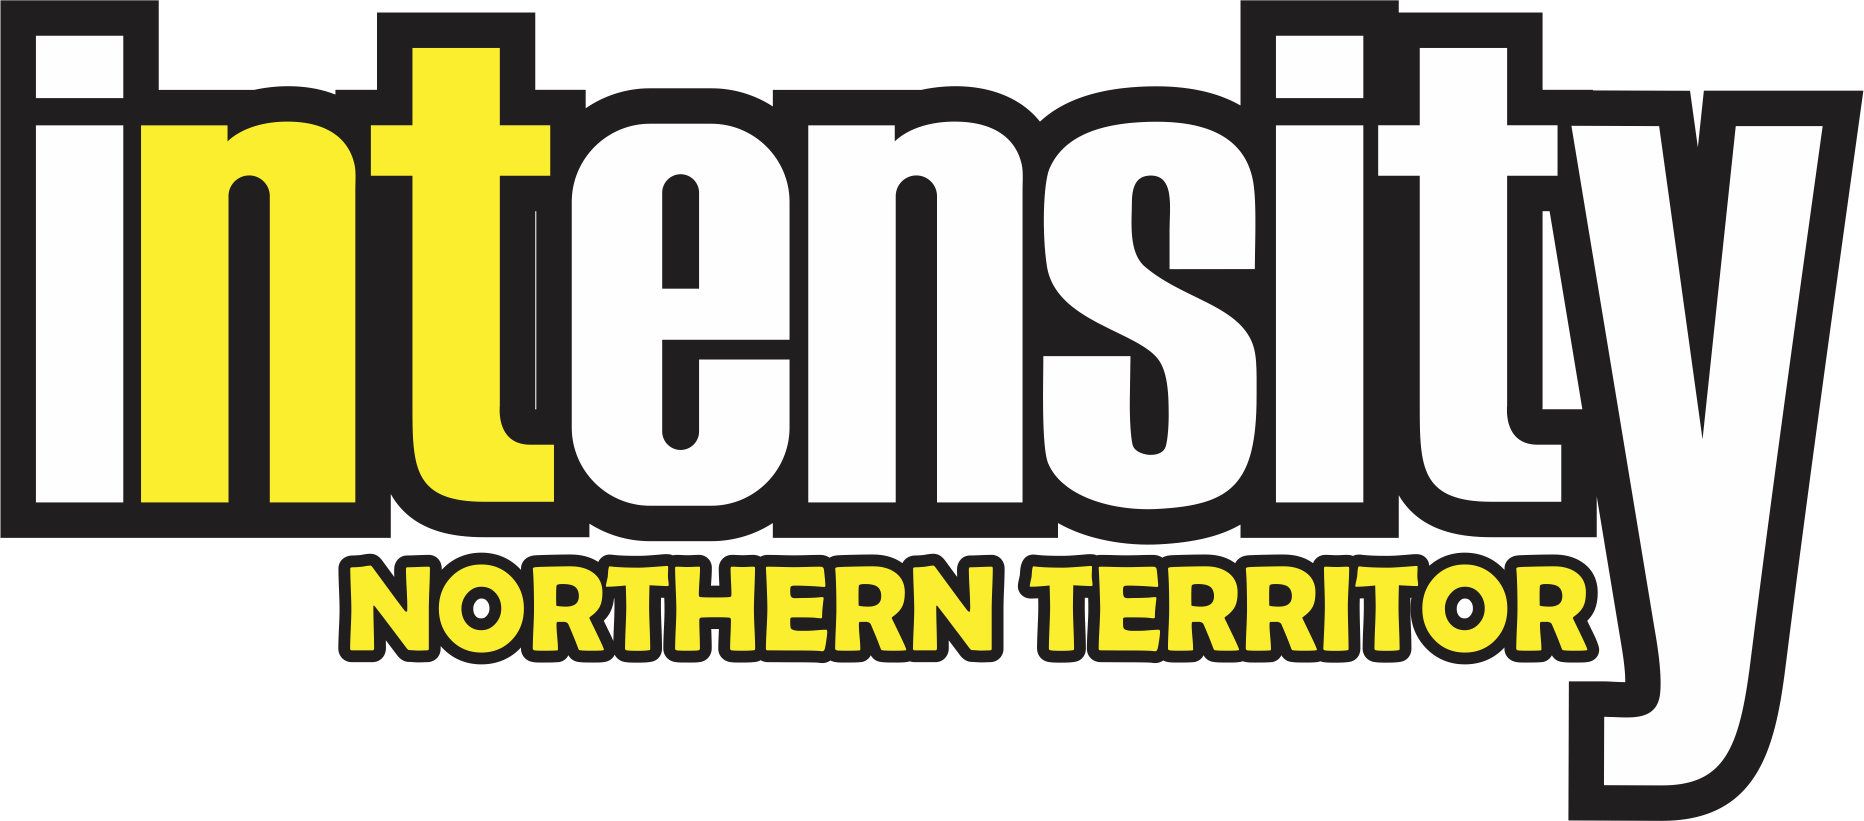 Intensity Northern Territor logo